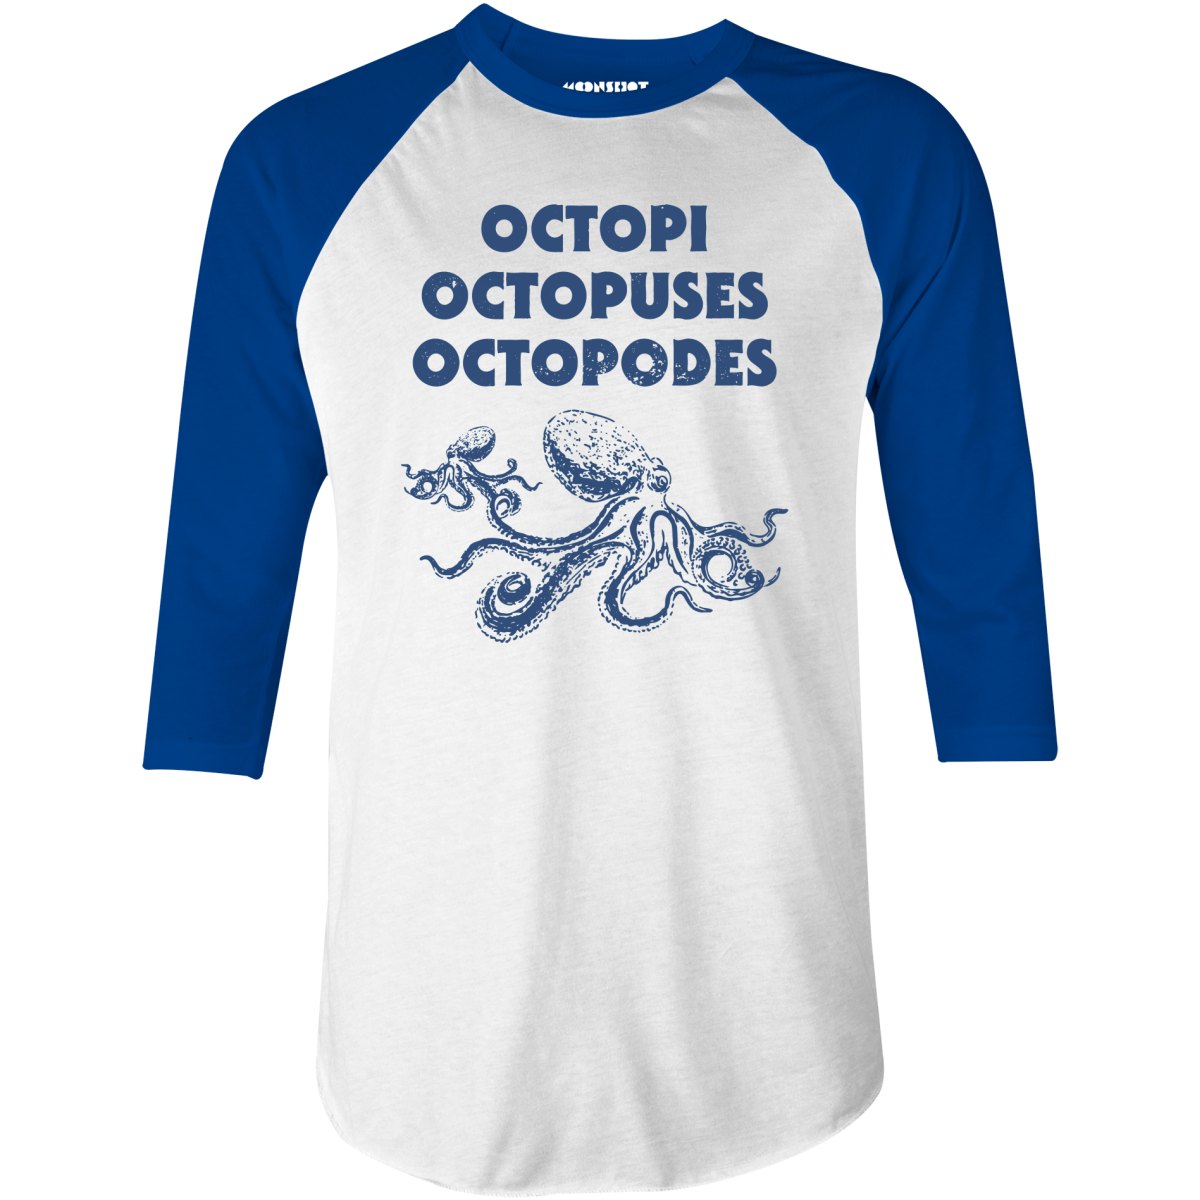 Octopi Octopuses Octopodes - 3/4 Sleeve Raglan T-Shirt